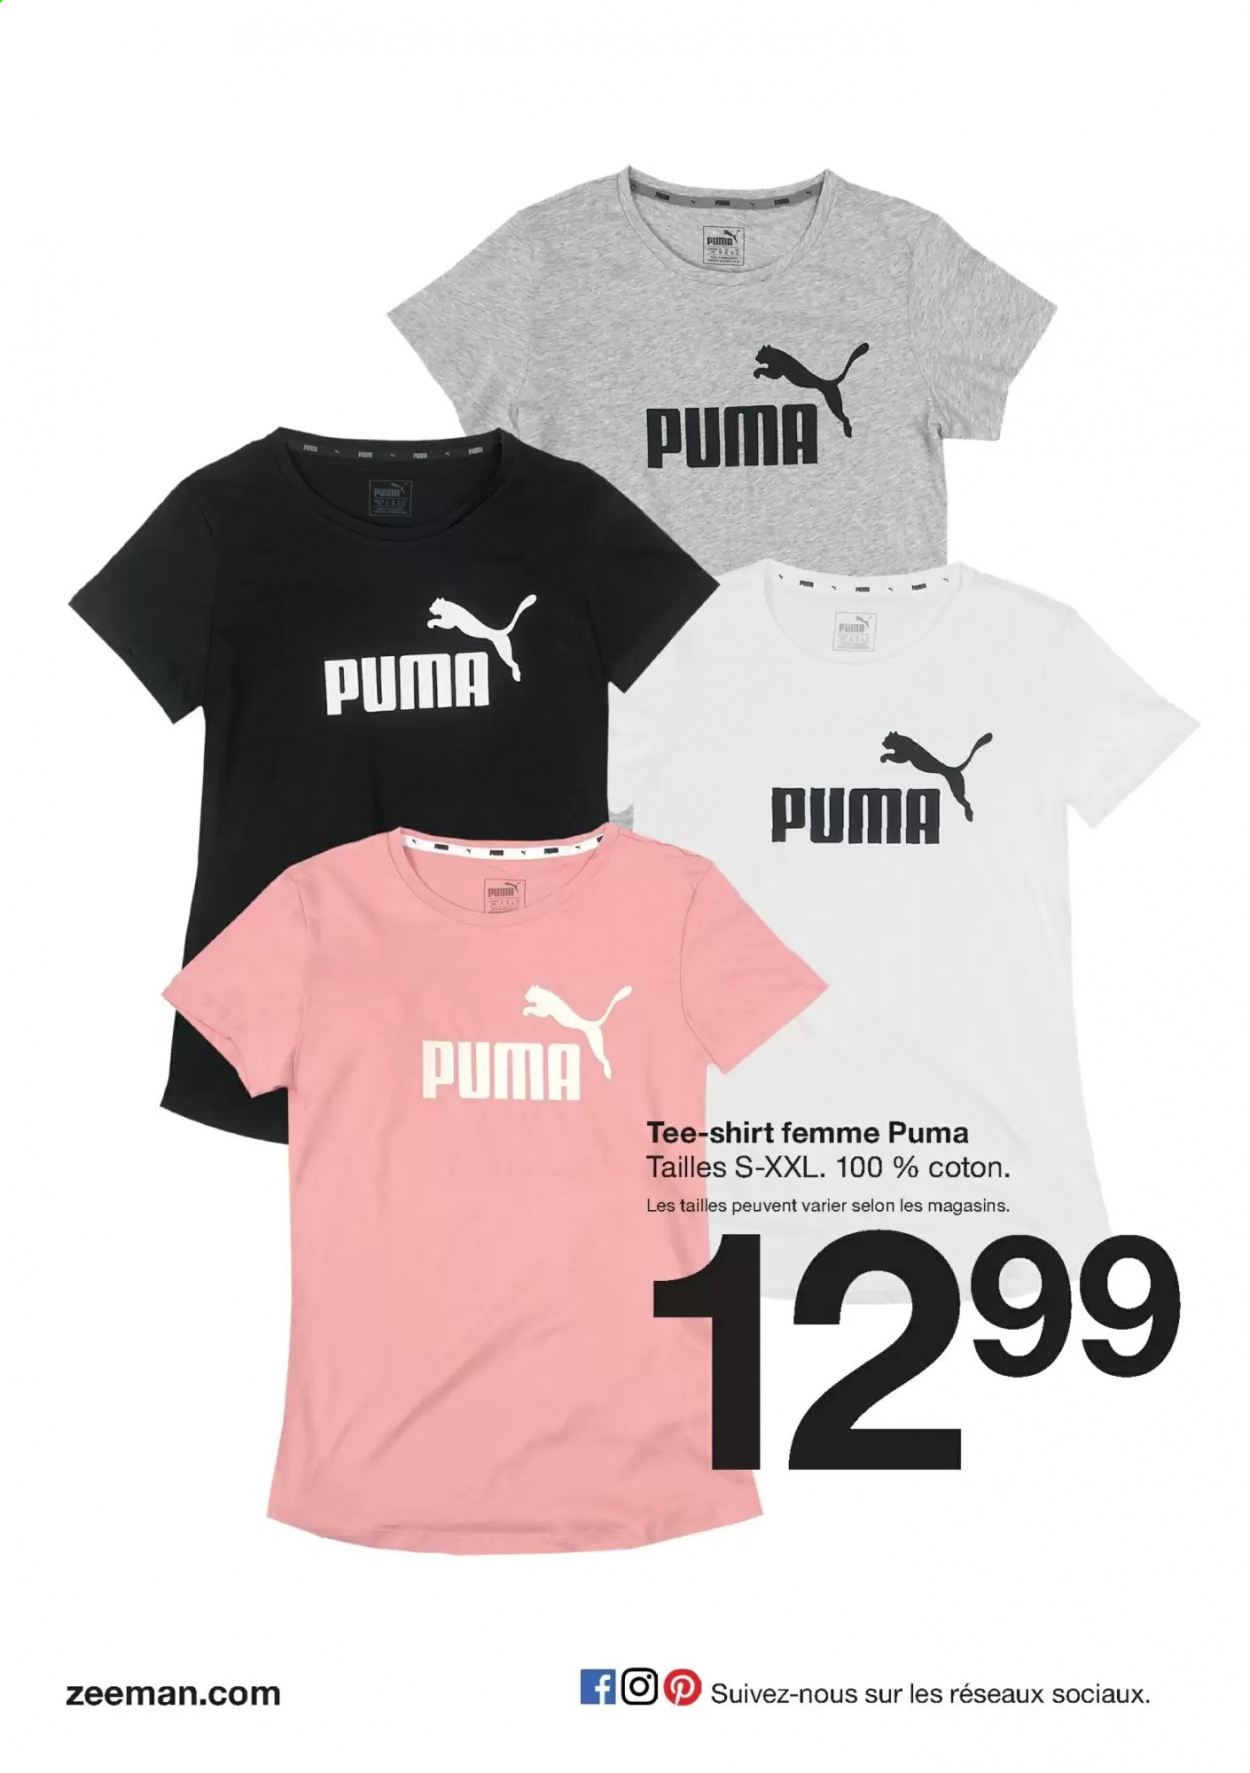 thumbnail - Catalogue Zeeman - 09/01/2021 - 15/01/2021 - Produits soldés - Puma, t-shirt. Page 4.